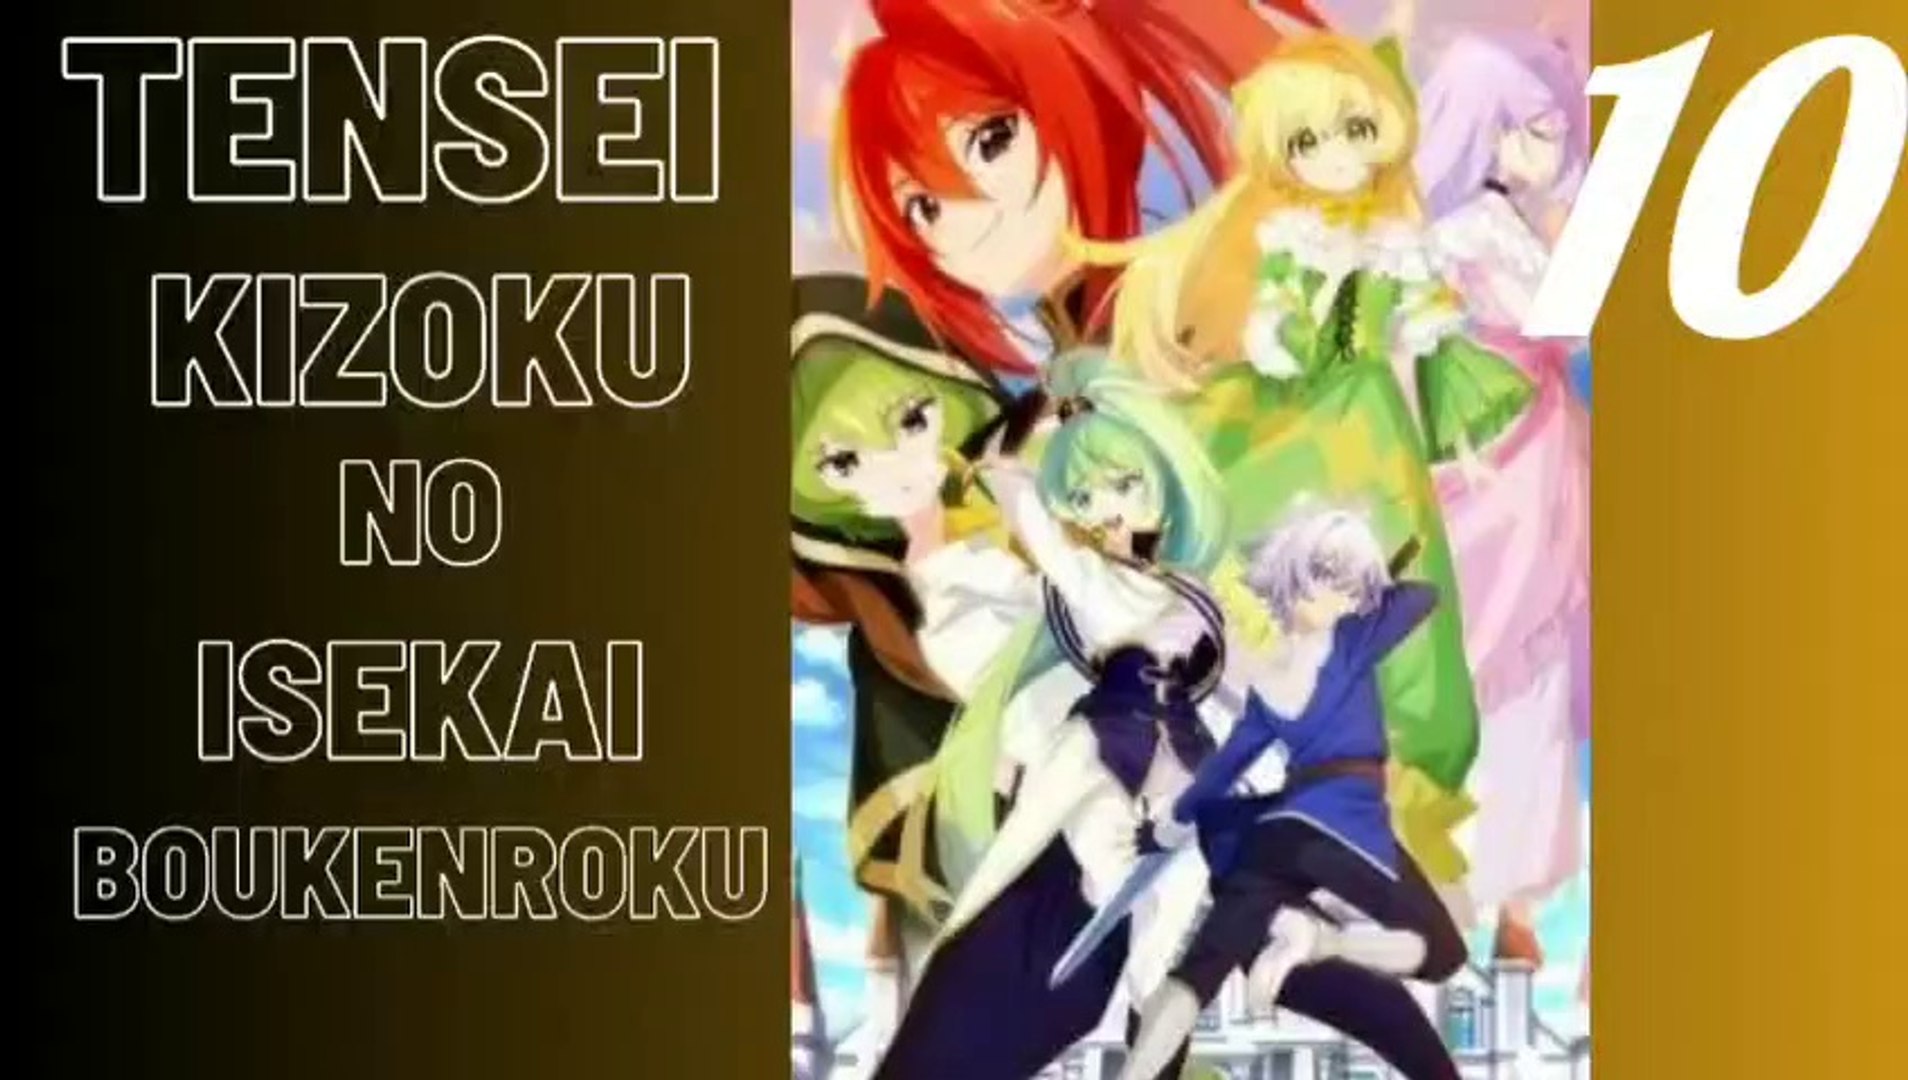 TENSEI KIZOKU NO ISekai BOUKENROKU ✓ EP 10 - video Dailymotion